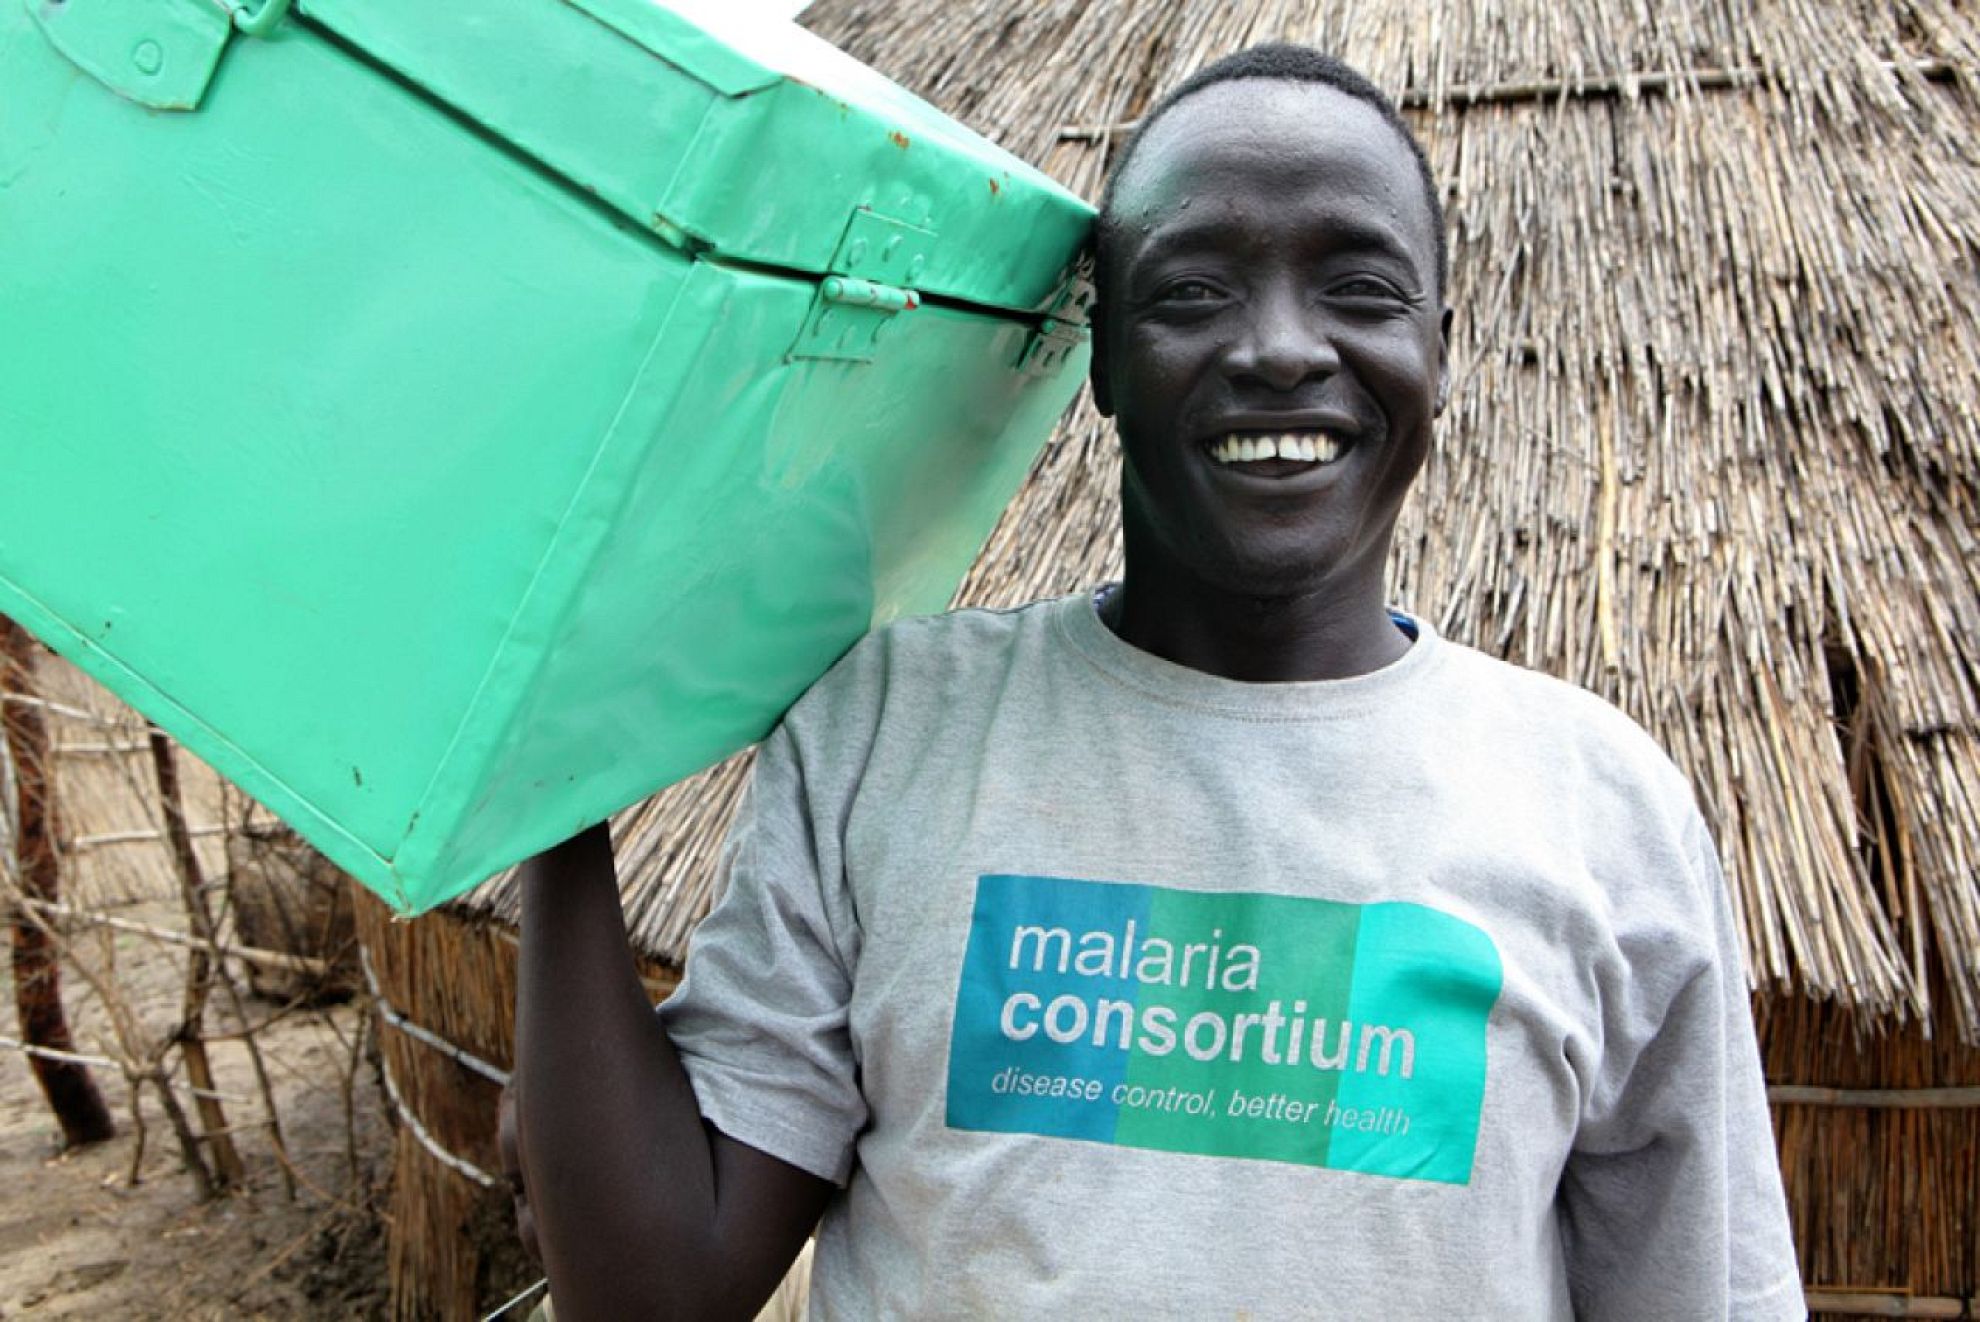 Malaria Consortium - Disease control, better health - Partnership